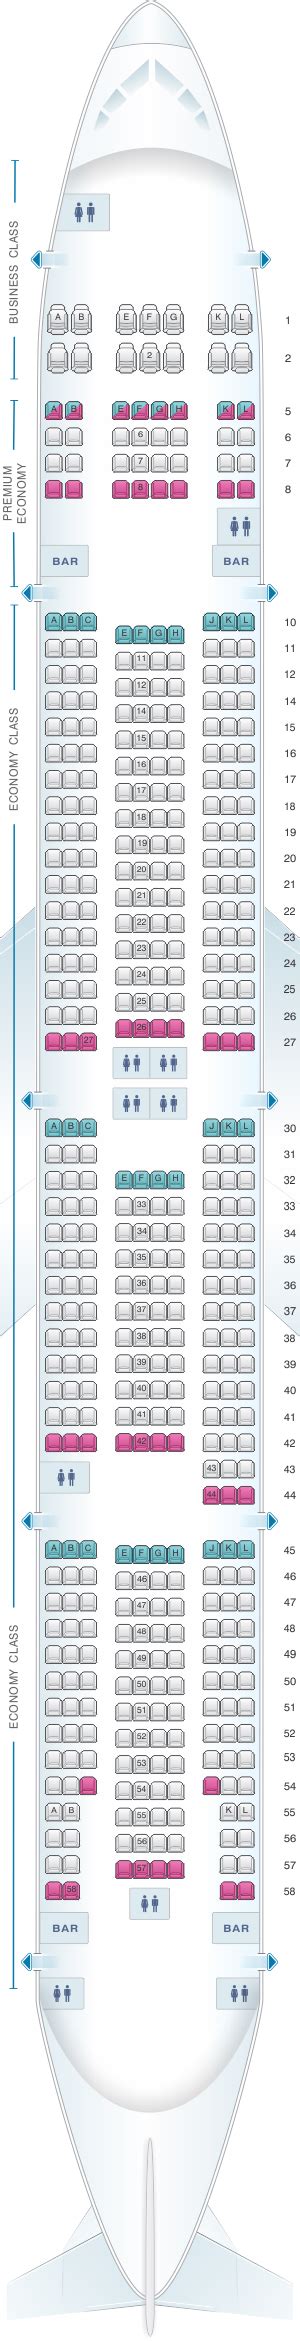 48 Best Seats On Boeing 777 300er Air France